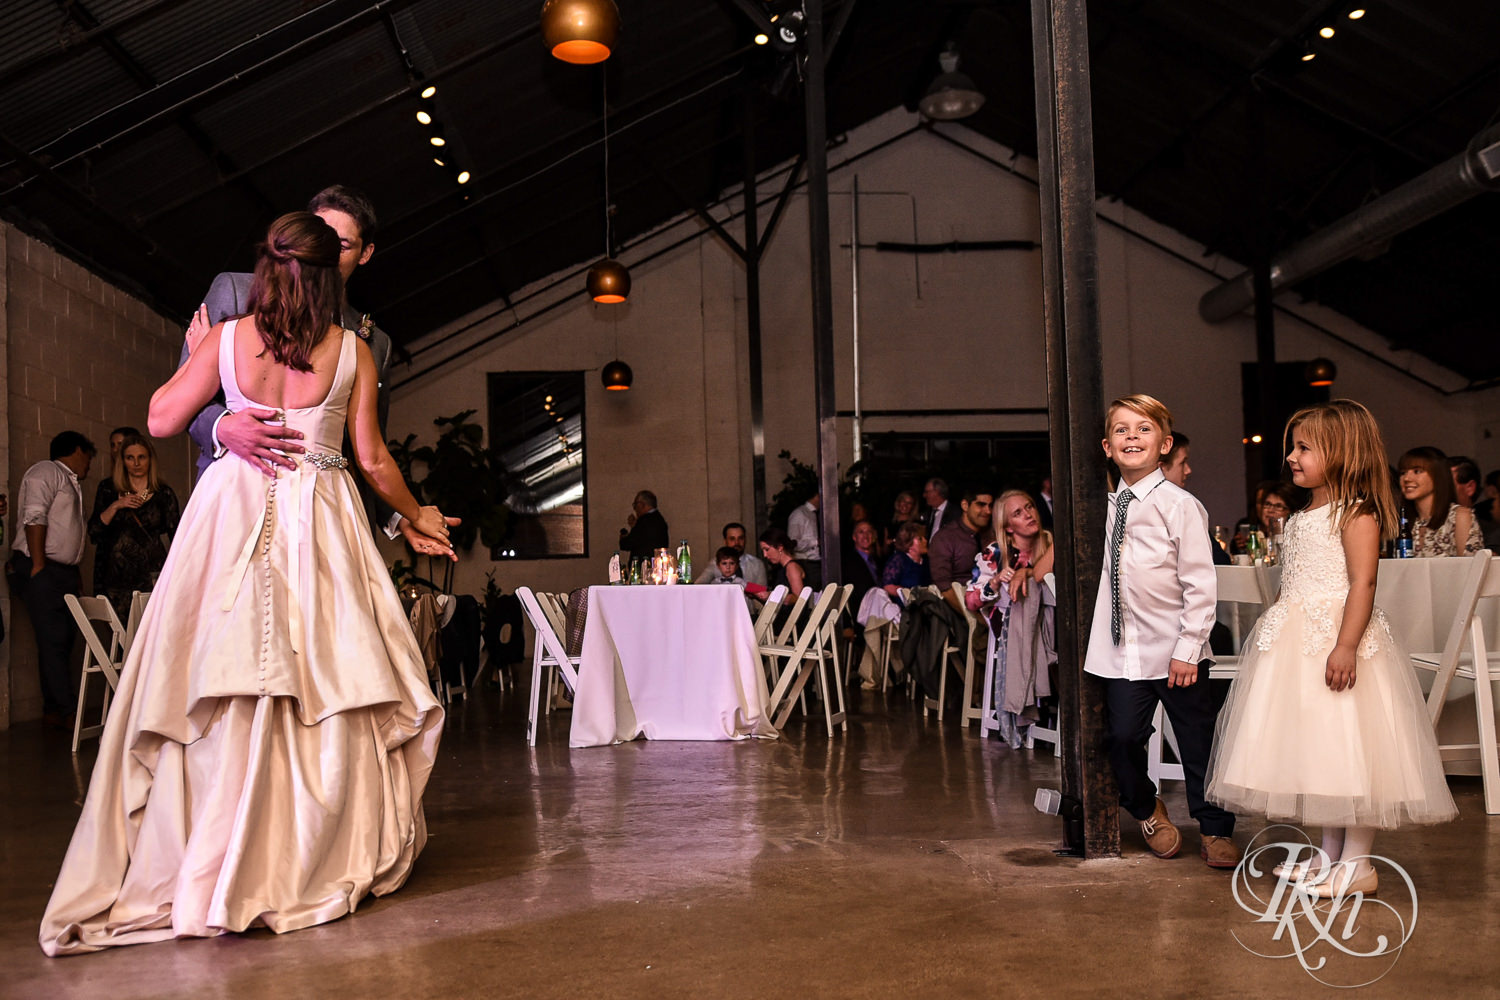 Bride and groom dance during wedding reception speeches at Paikka in Saint Paul, Minnesota.